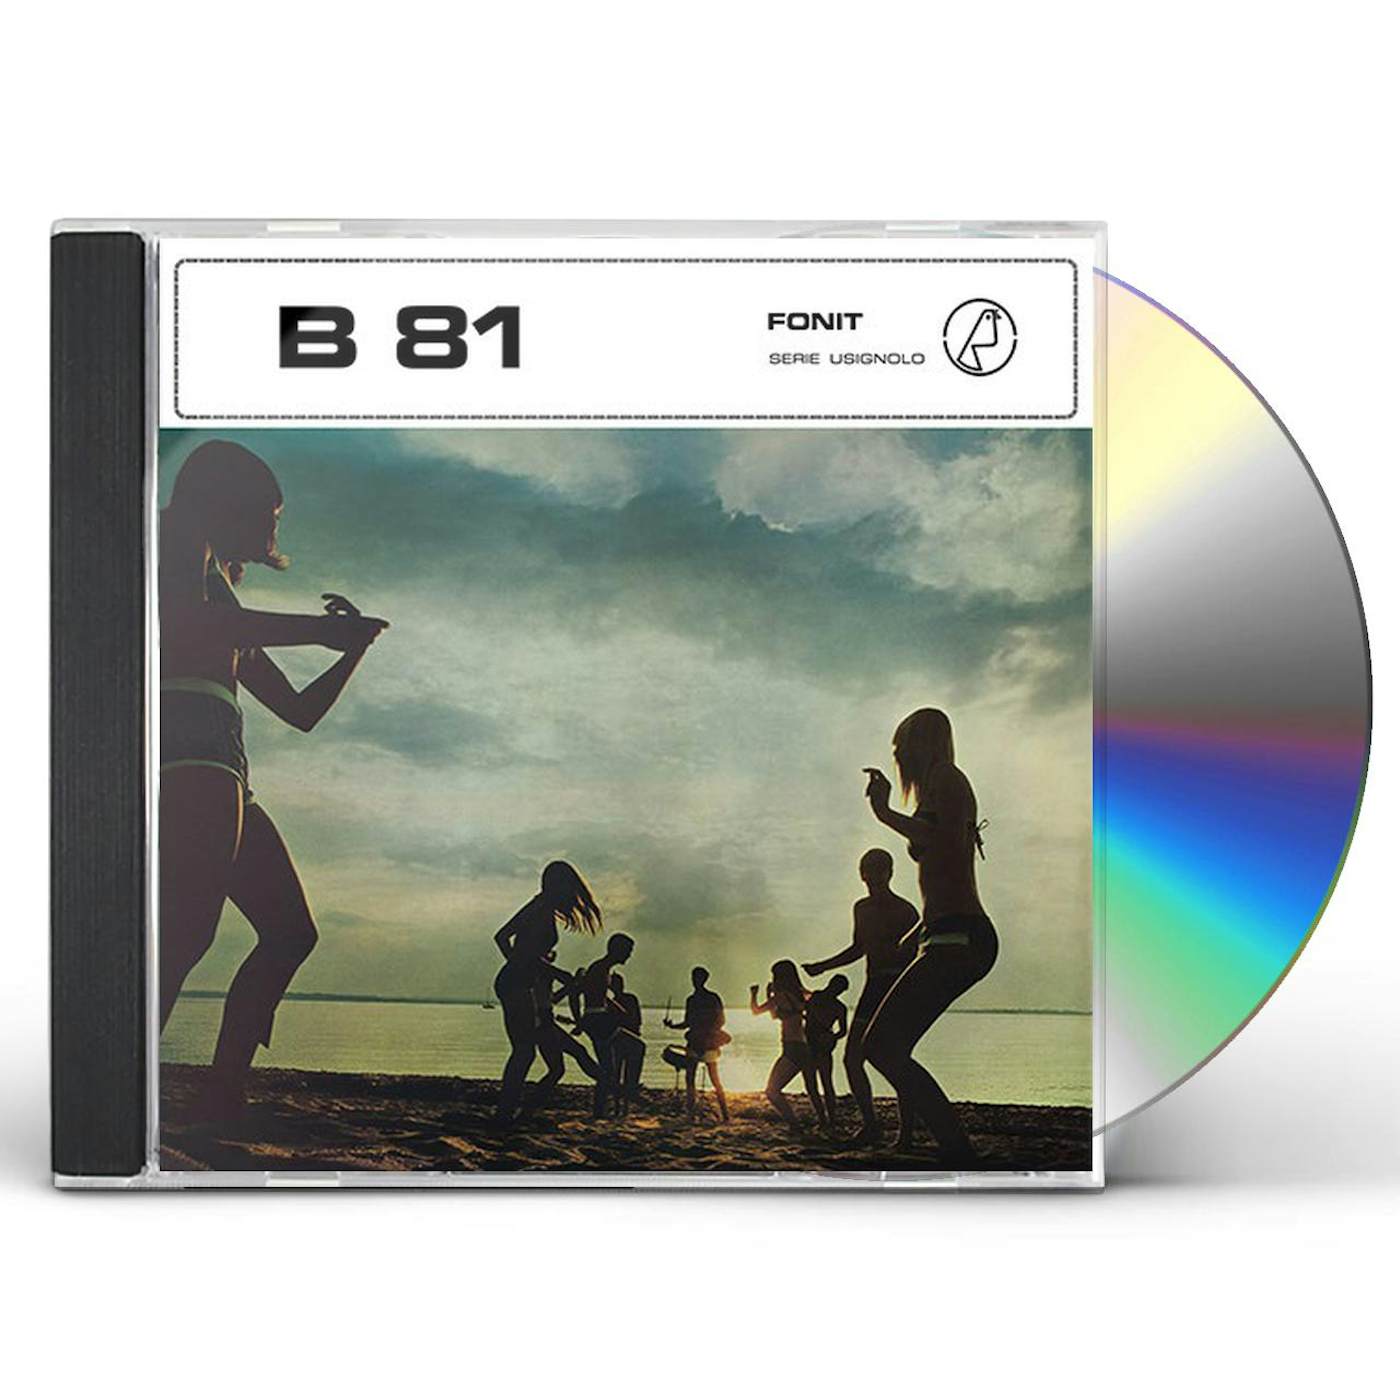 Fabio Fabor B81 - BALLABILI ANNI '70 (UNDERGROUND) - Original Soundtrack CD